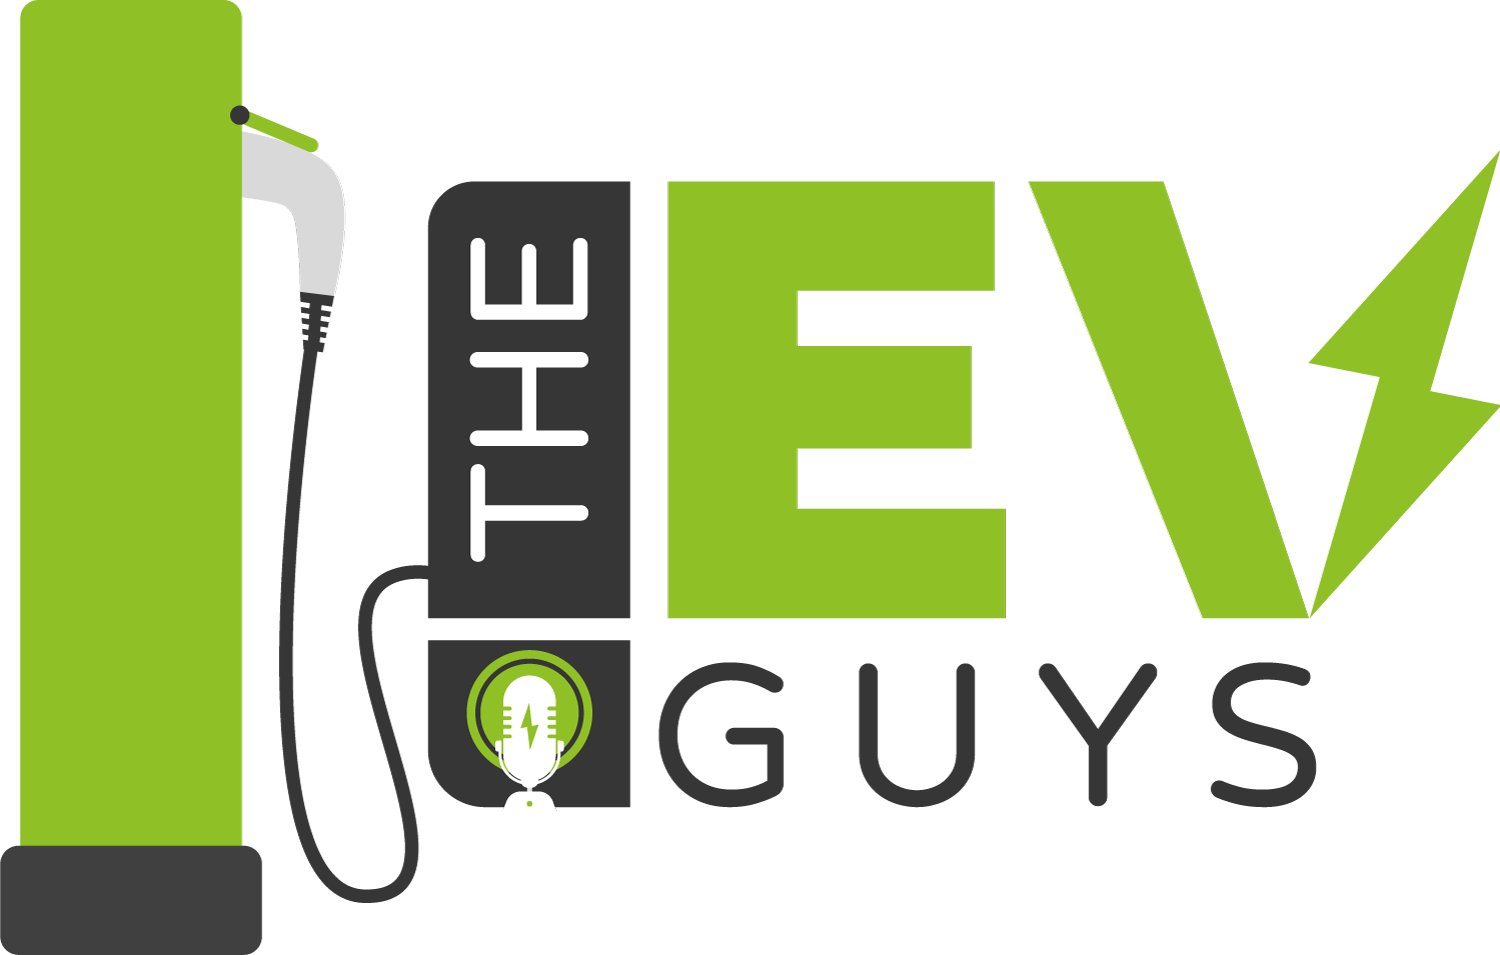 The EV Guys